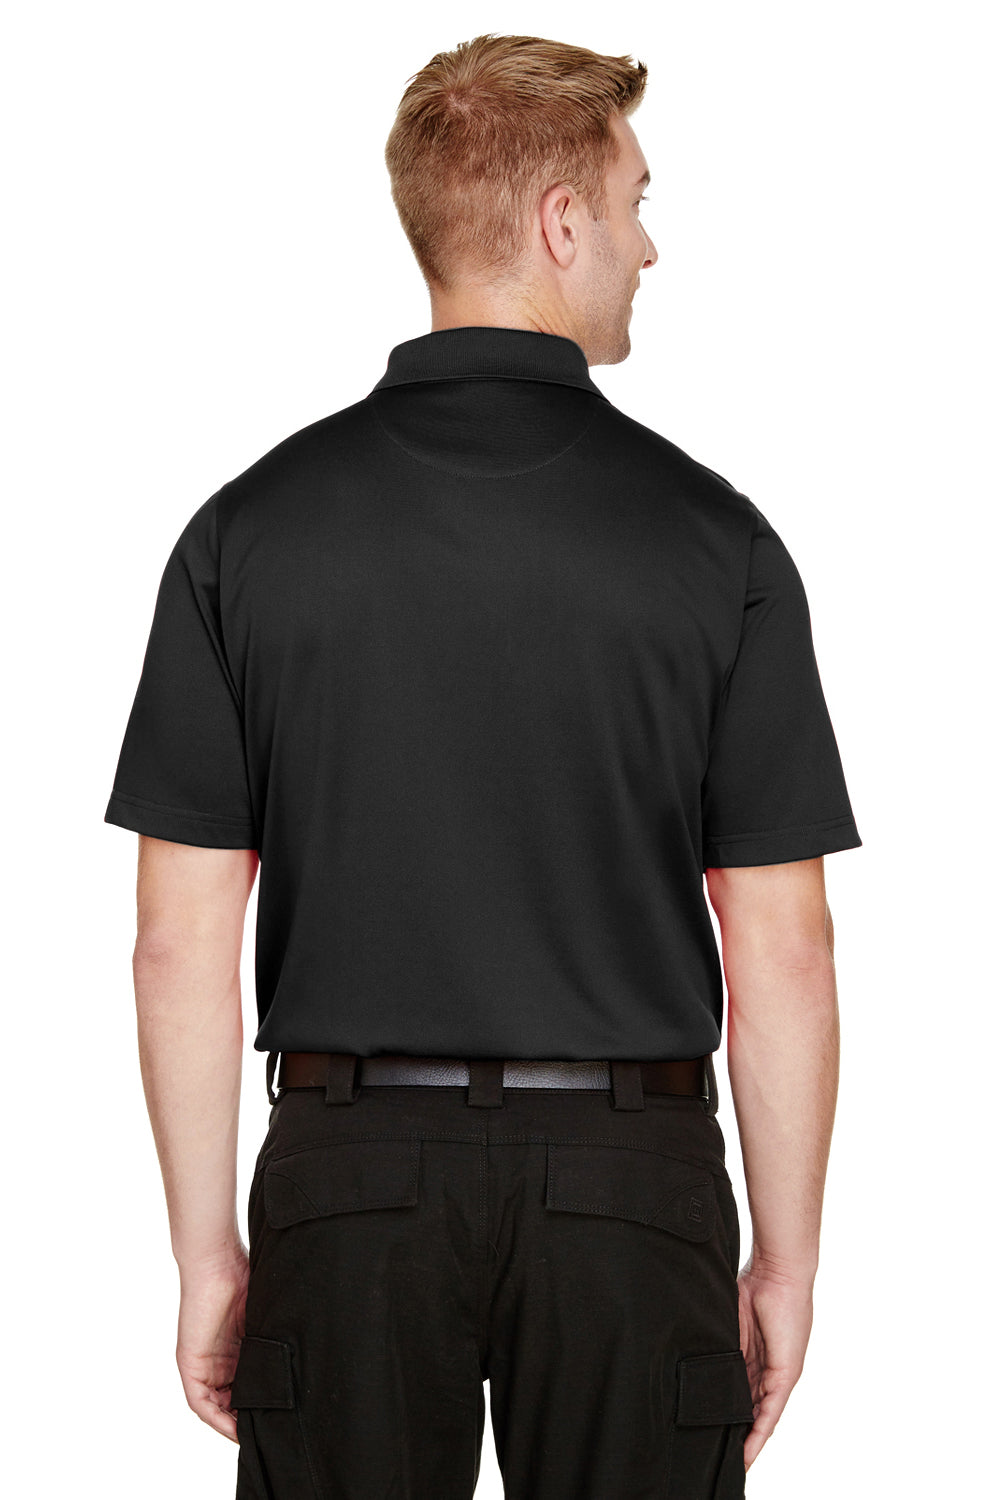 Harriton M348 Mens Advantage Performance Moisture Wicking Short Sleeve Polo Shirt Black Back